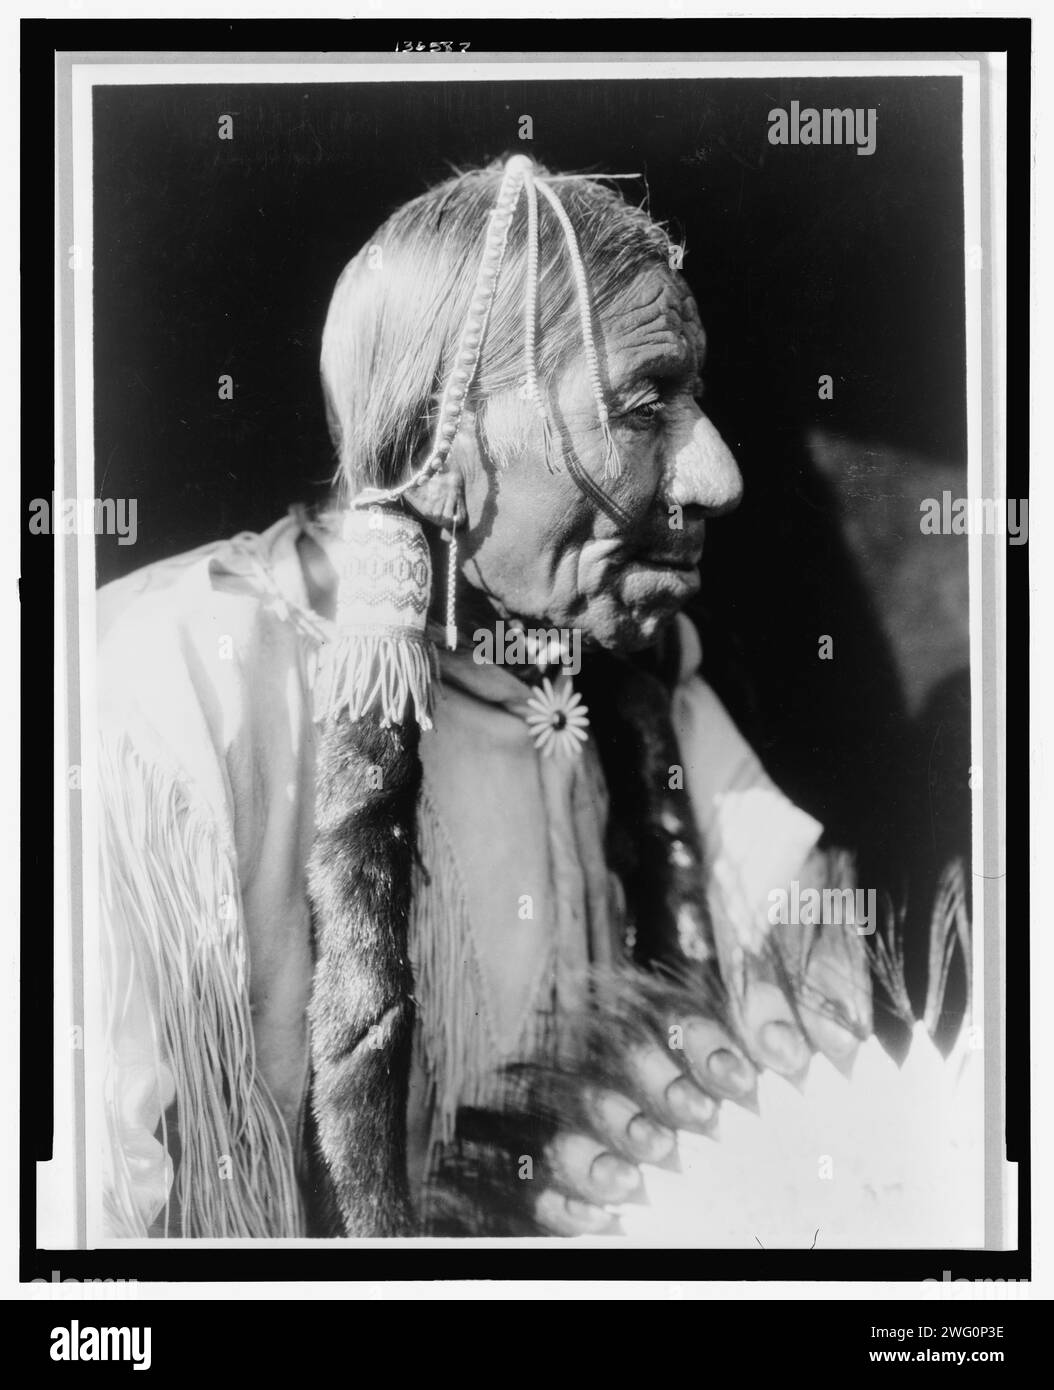 Esipermi-Comanche, c1927. American Indian man, head-and-shoulders portrait, facing right. Stock Photo